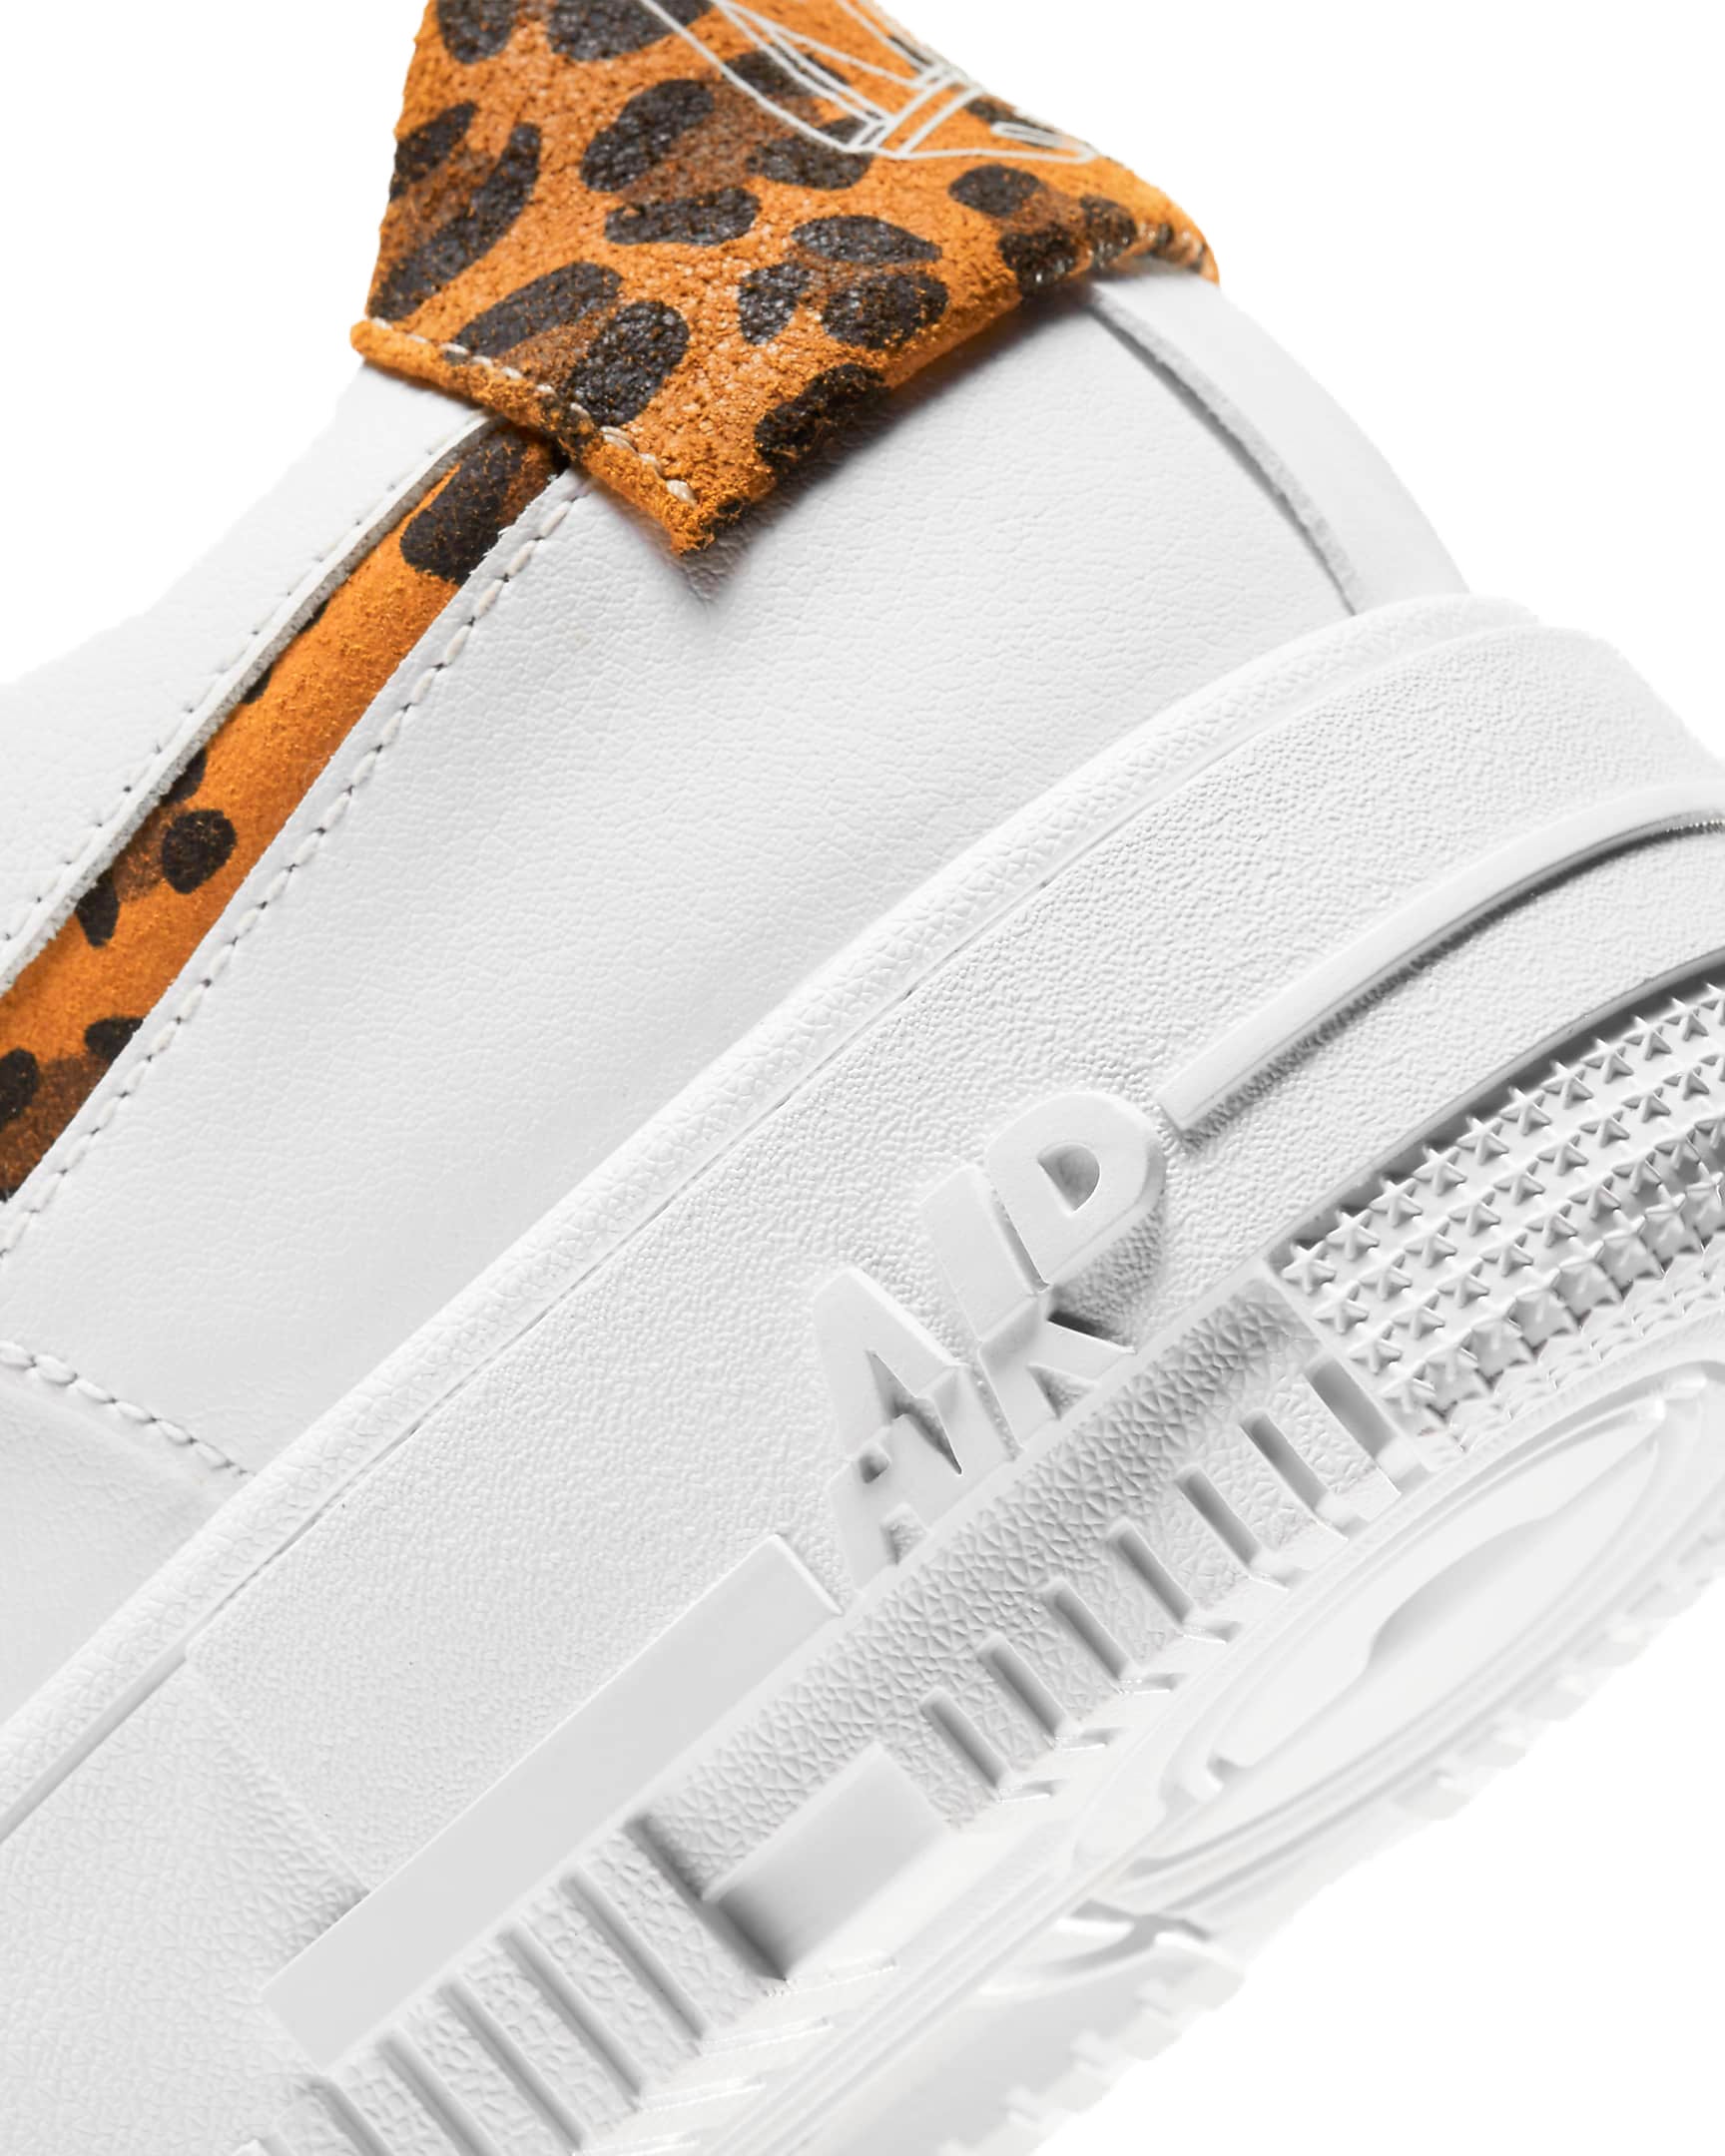 Nike Air Force 1 Pixel SE 'White Leopard'